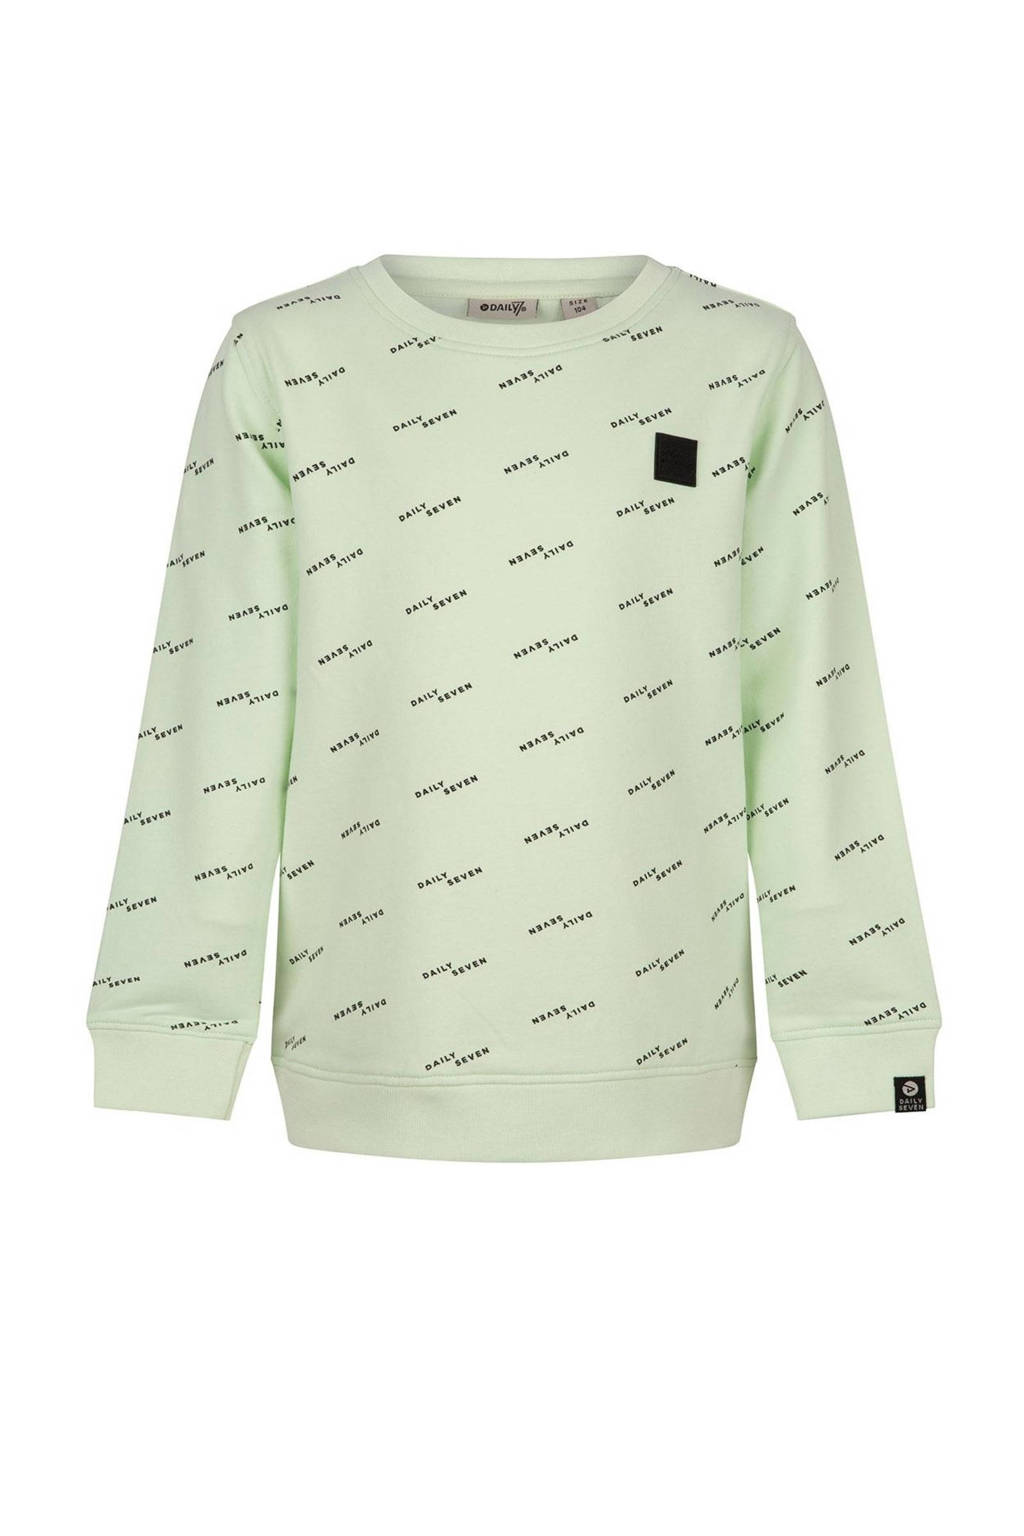 Daily7 sweater met all over print fris groen